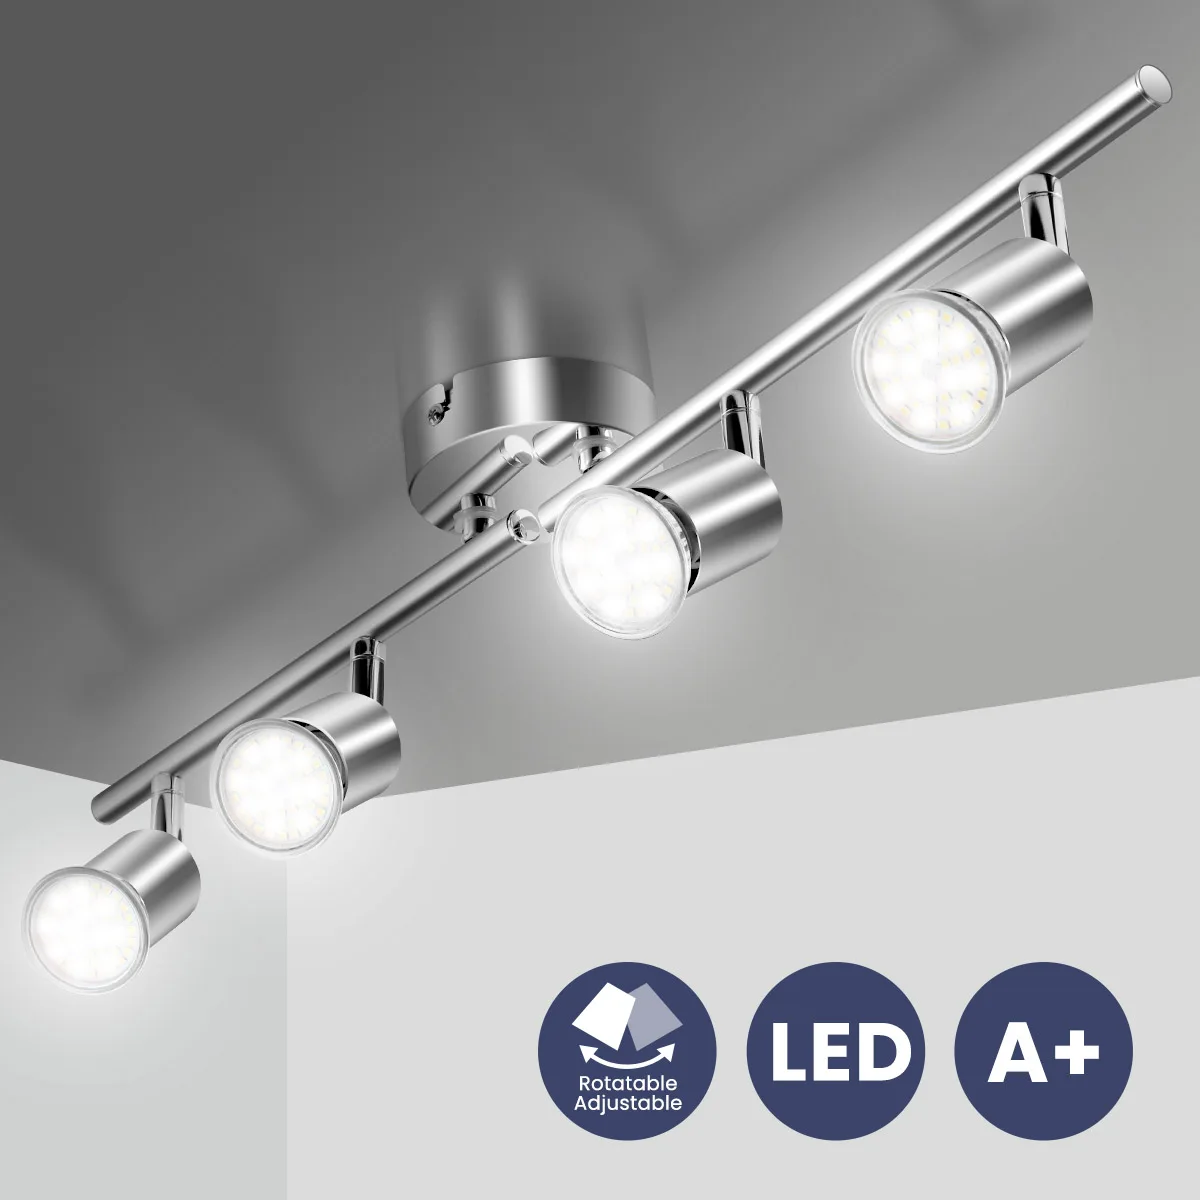 New Arrival 4 Heads Ceiling Lamp Lighting Angle Adjustable Spotlights GU10 Spot Lights Bulb for Store Shop Showroom Lighting